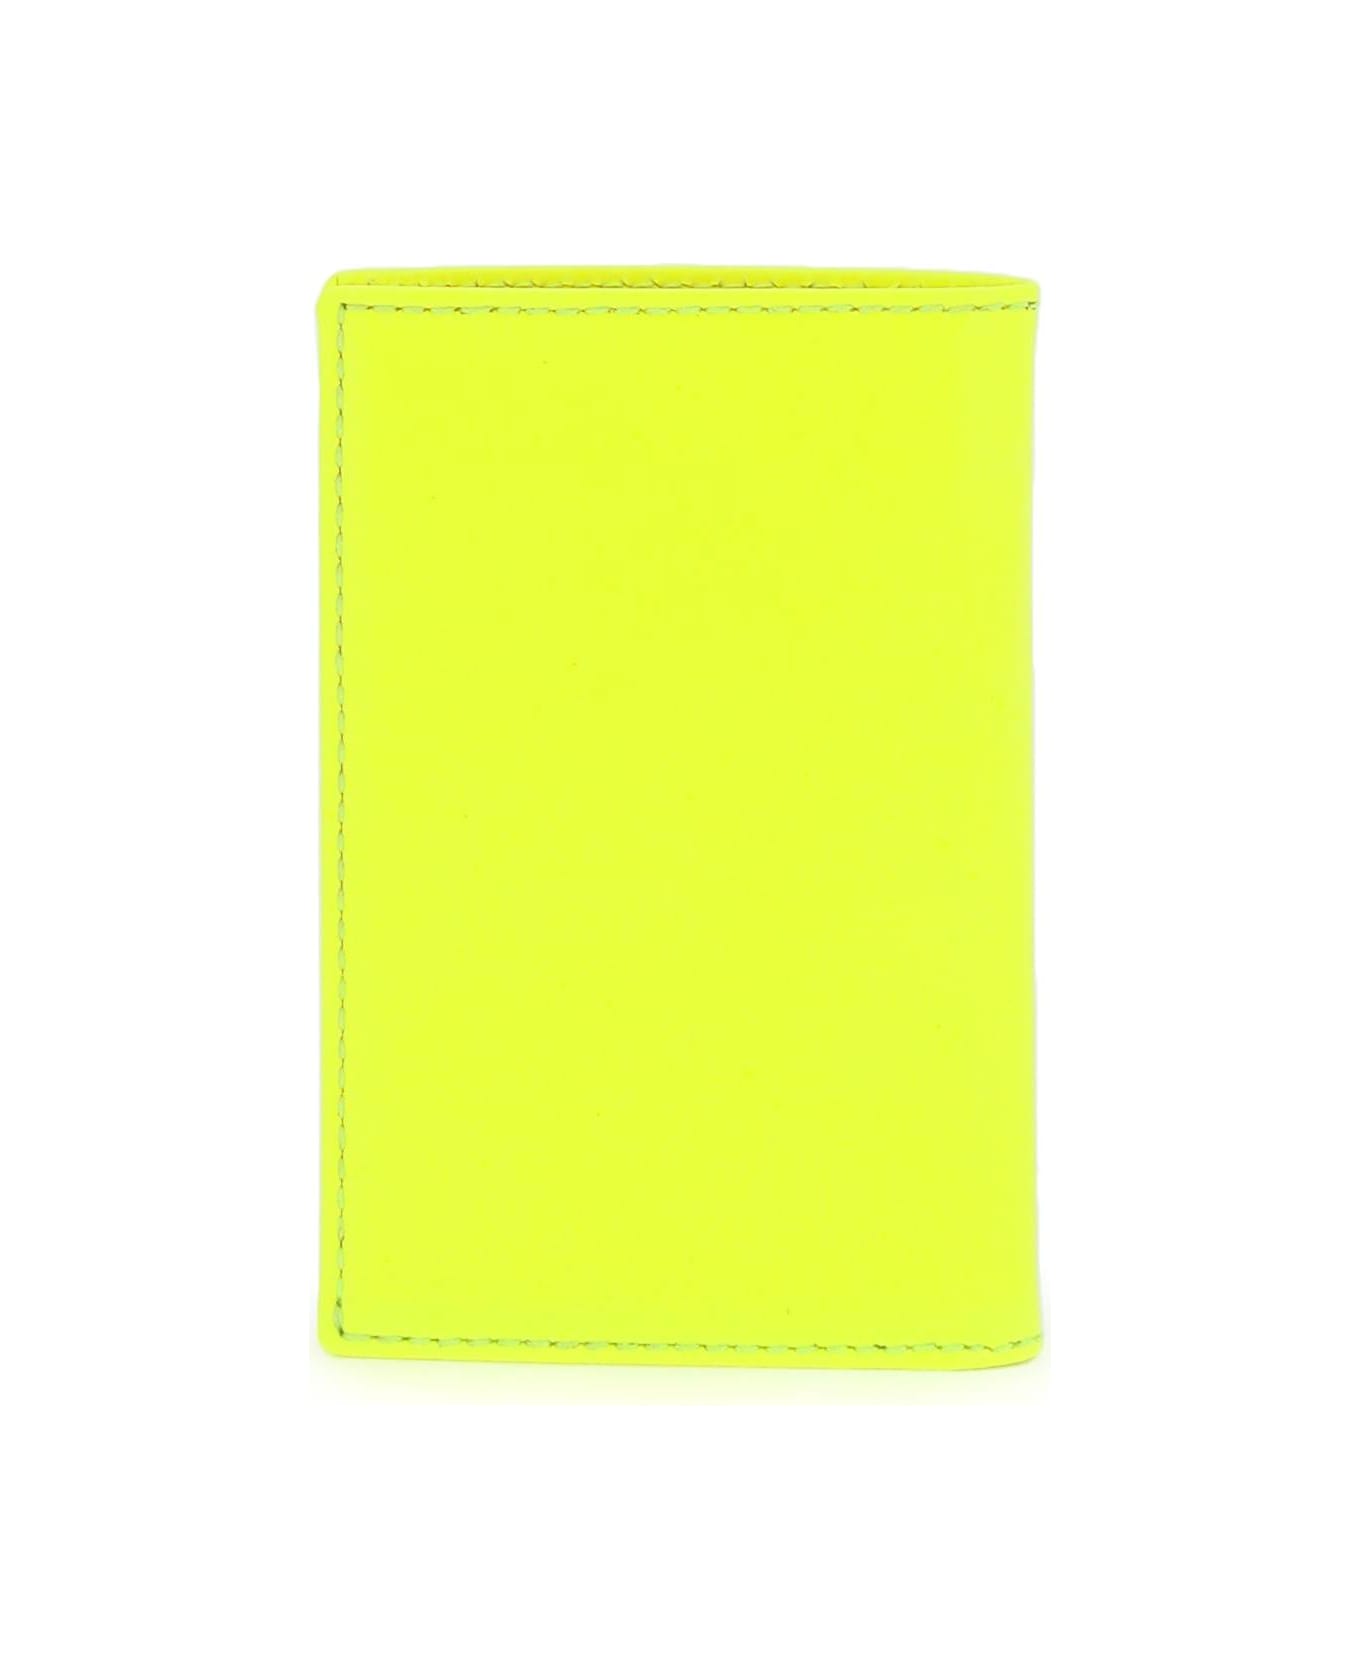 Comme des Garçons Wallet Super Fluo Bi-fold Wallet - YELLOW (Orange)